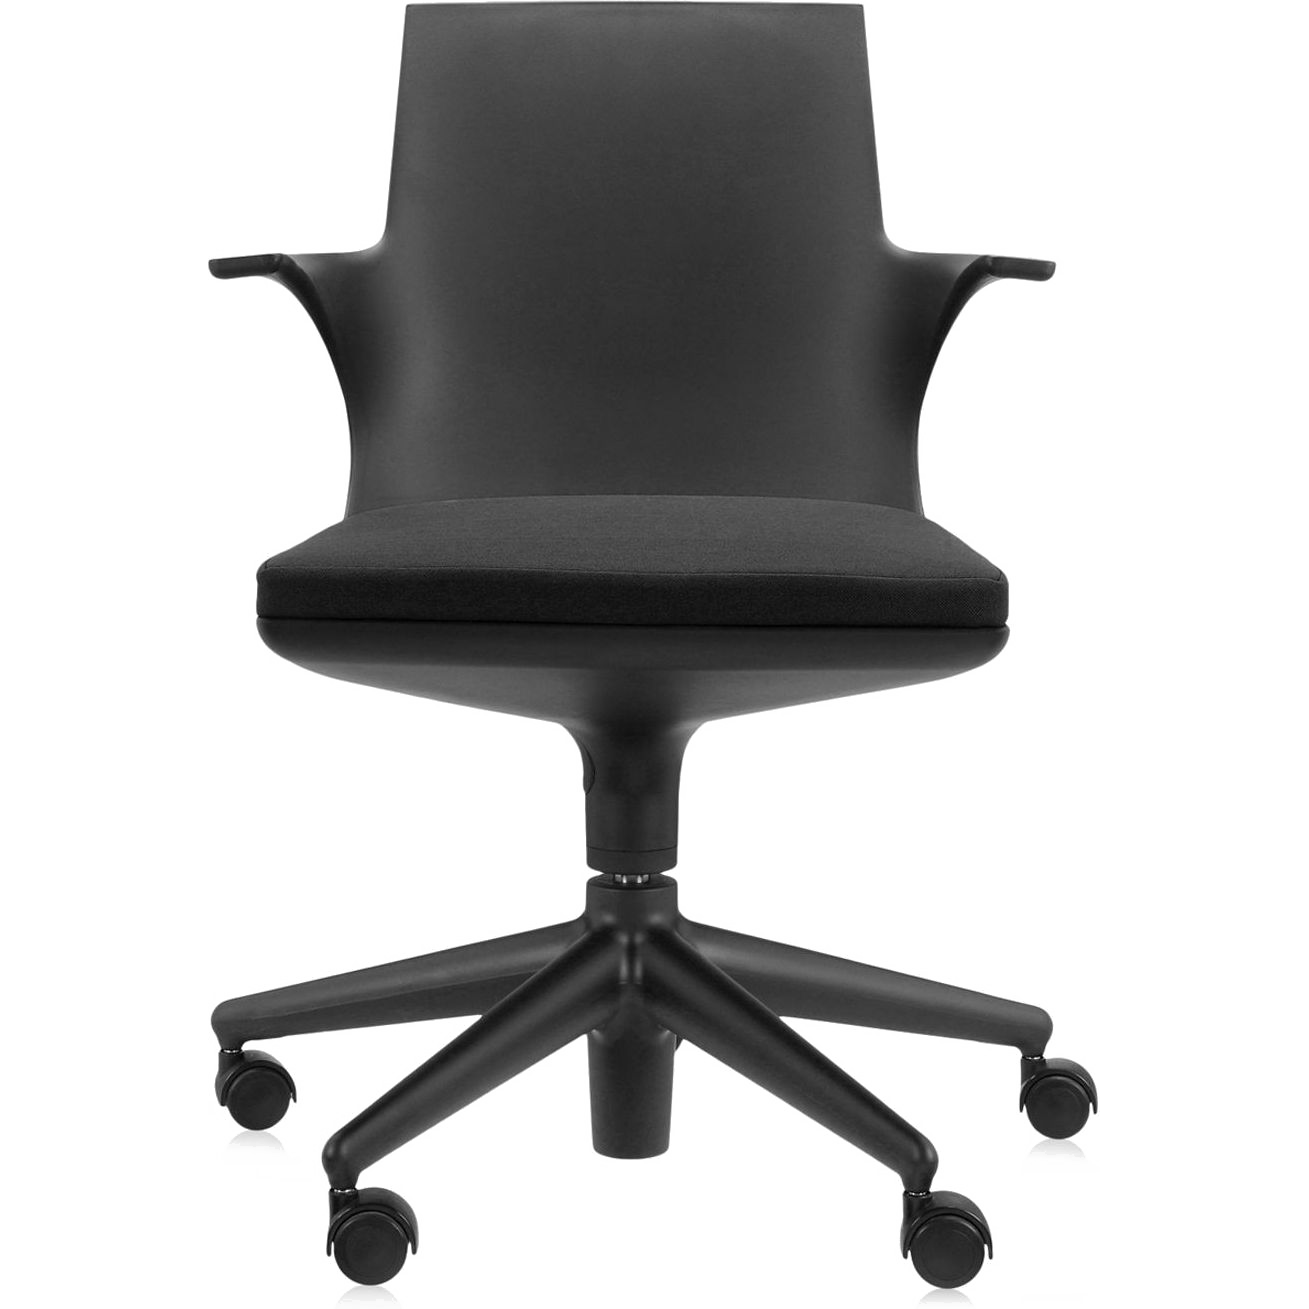 Working Chair Spoon Chair